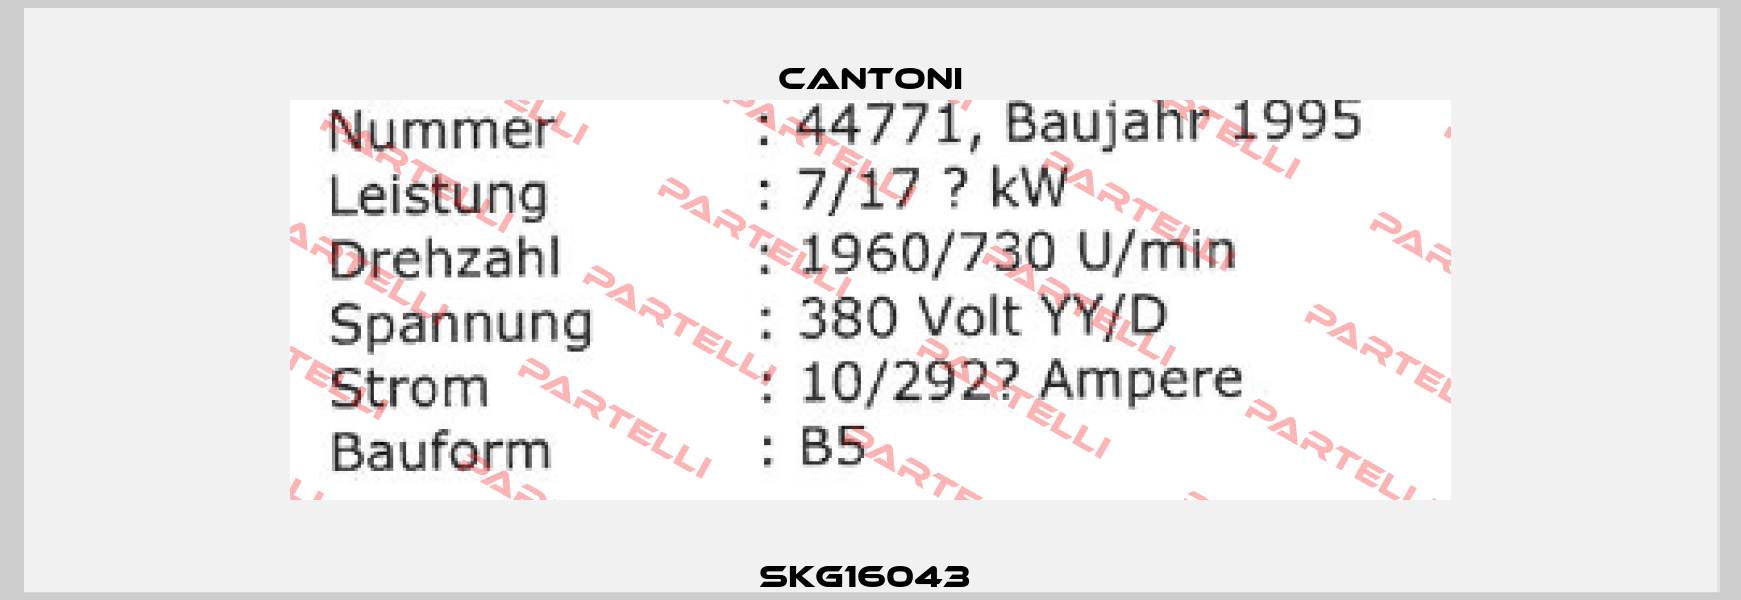 SKG16043  Cantoni